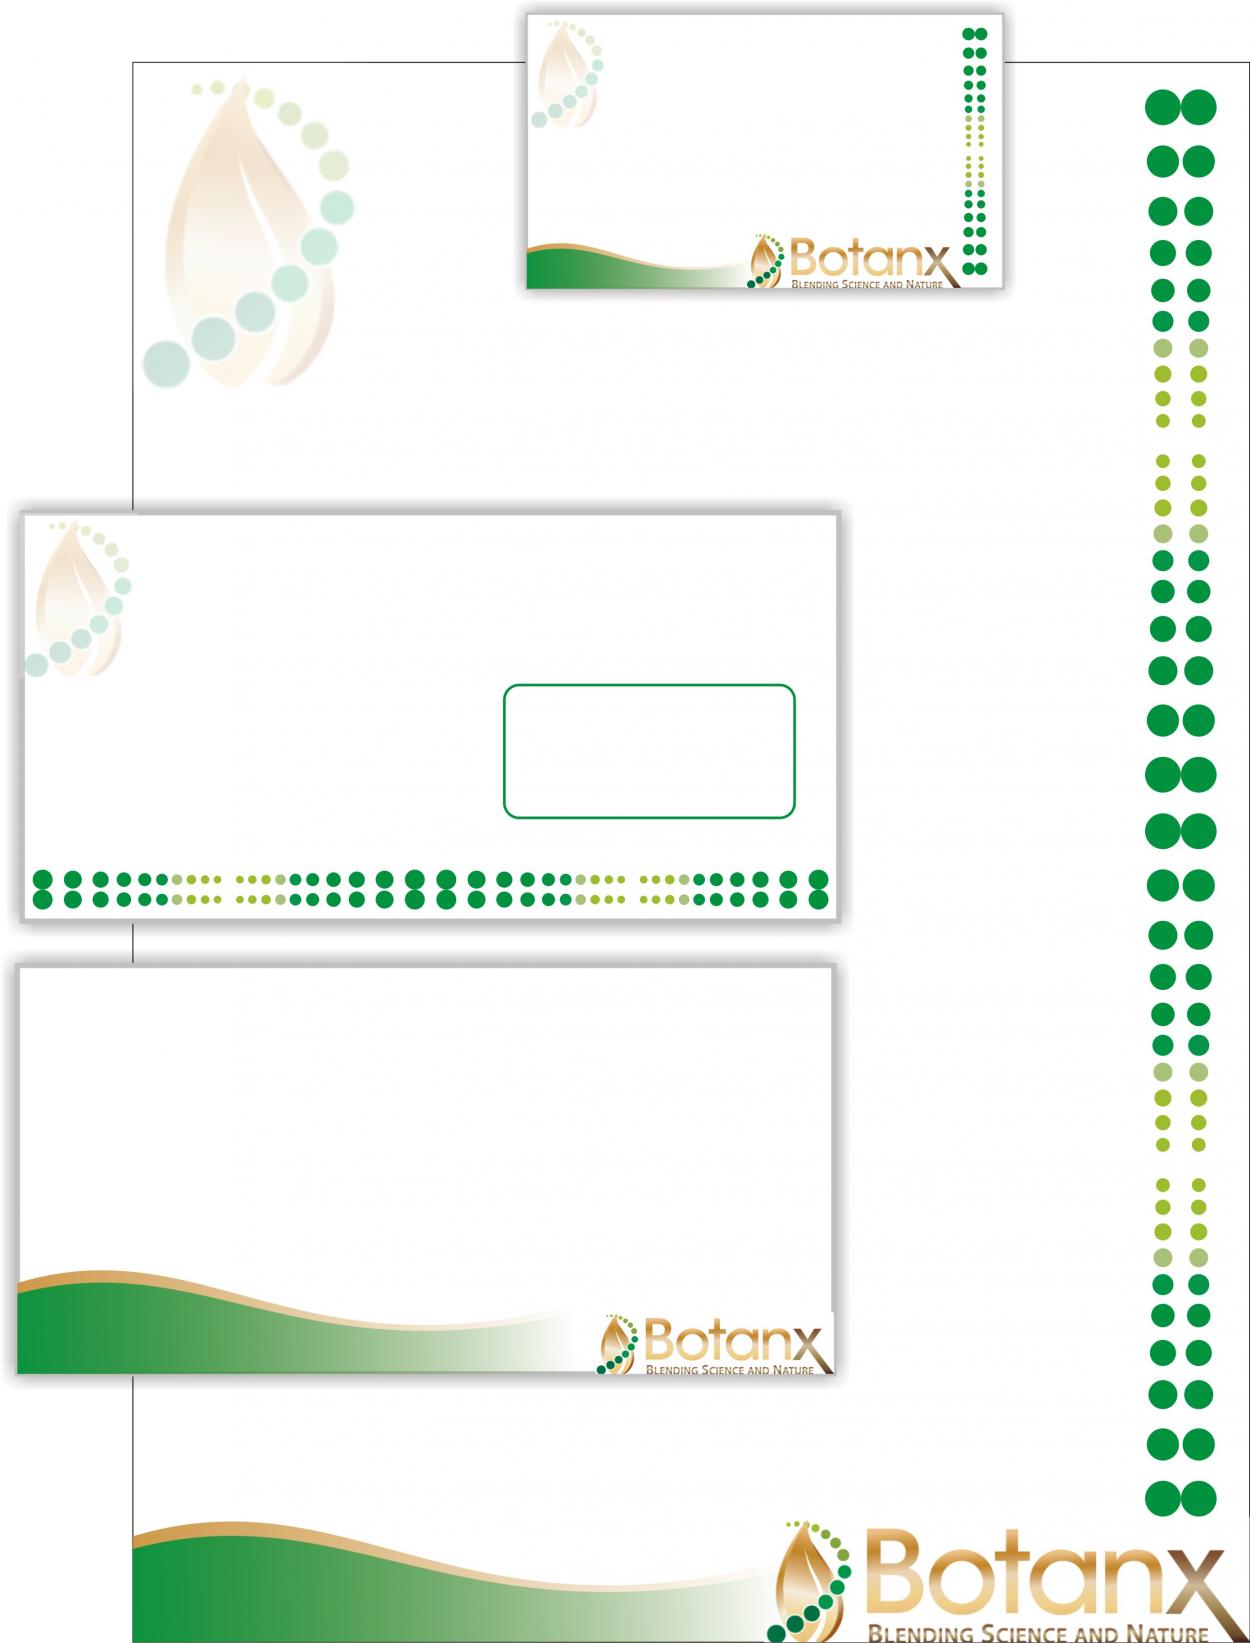 Business Card & Stationery Design entry 226419 submitted by masgantengheu to the Business Card & Stationery Design for Botanx, LLC run by botanxllc